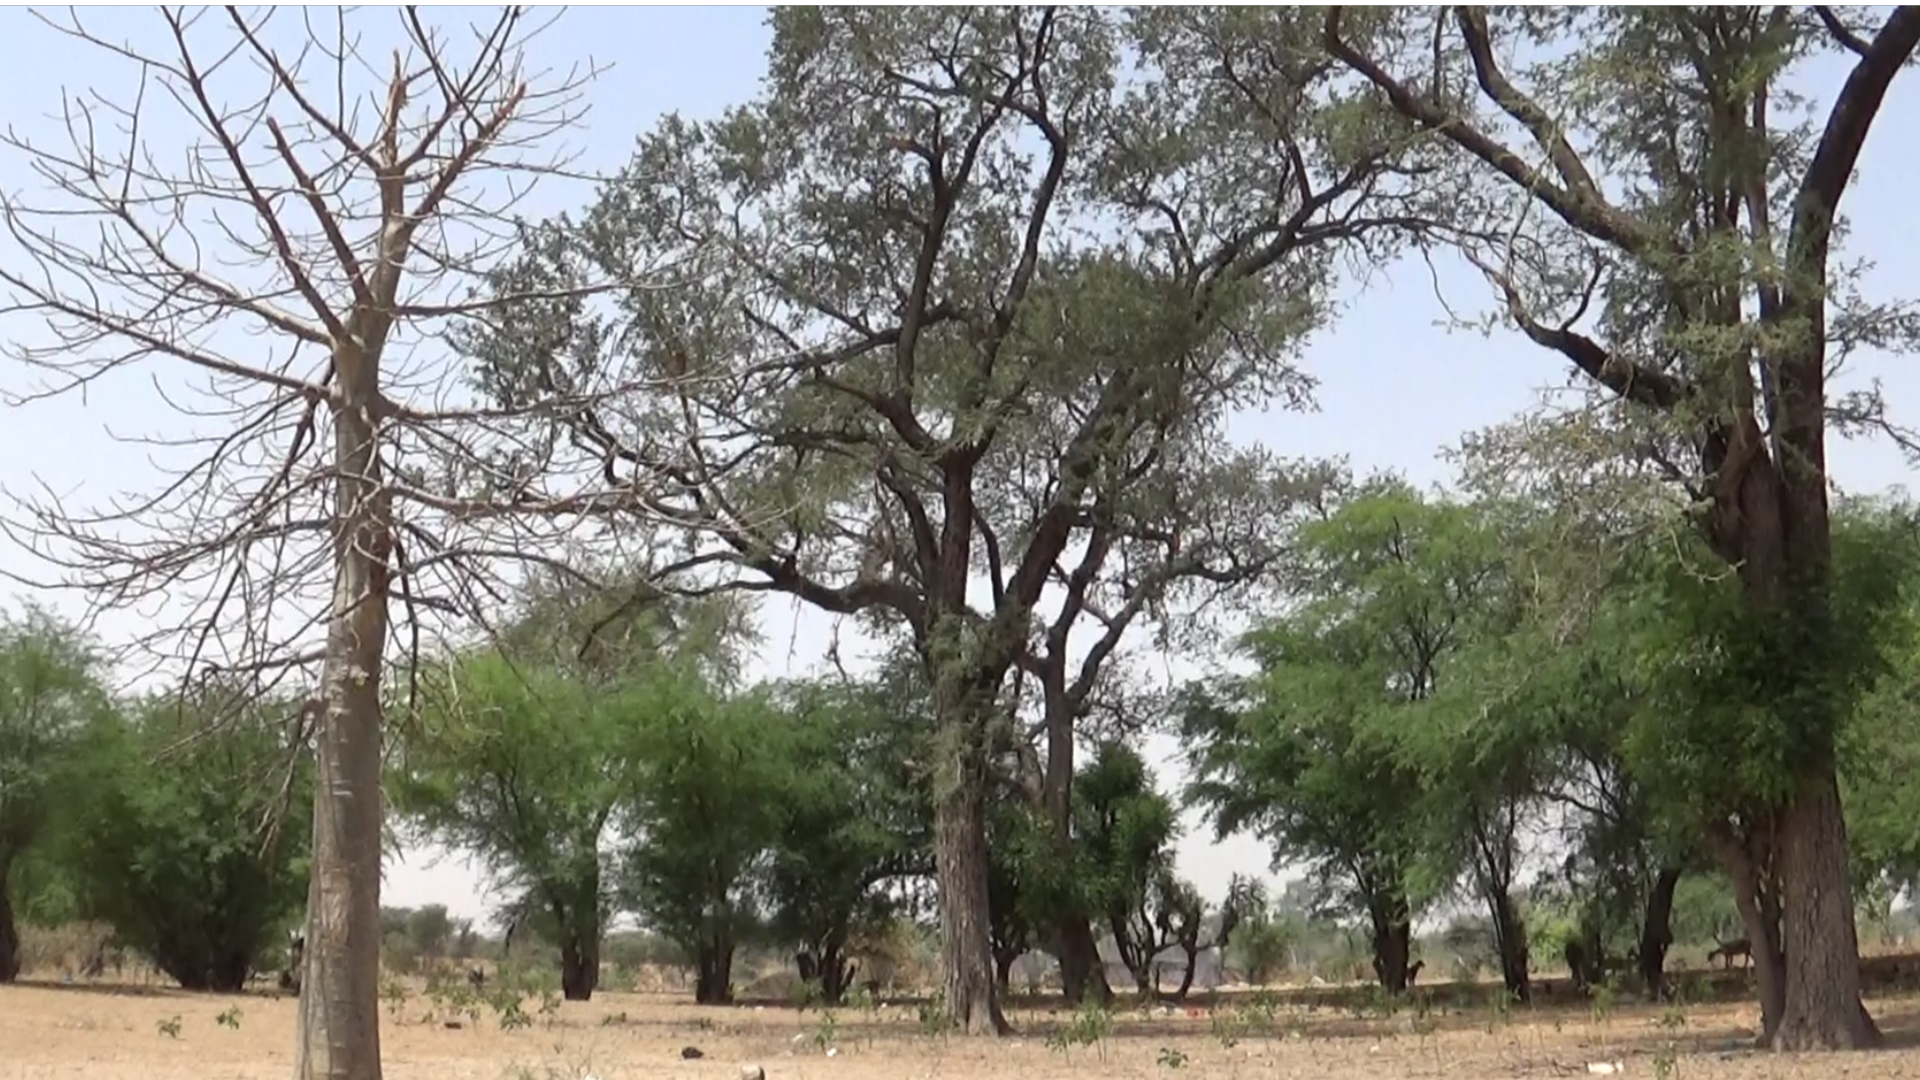 la savane semi aride avec ses kadds, à gauche un baobab